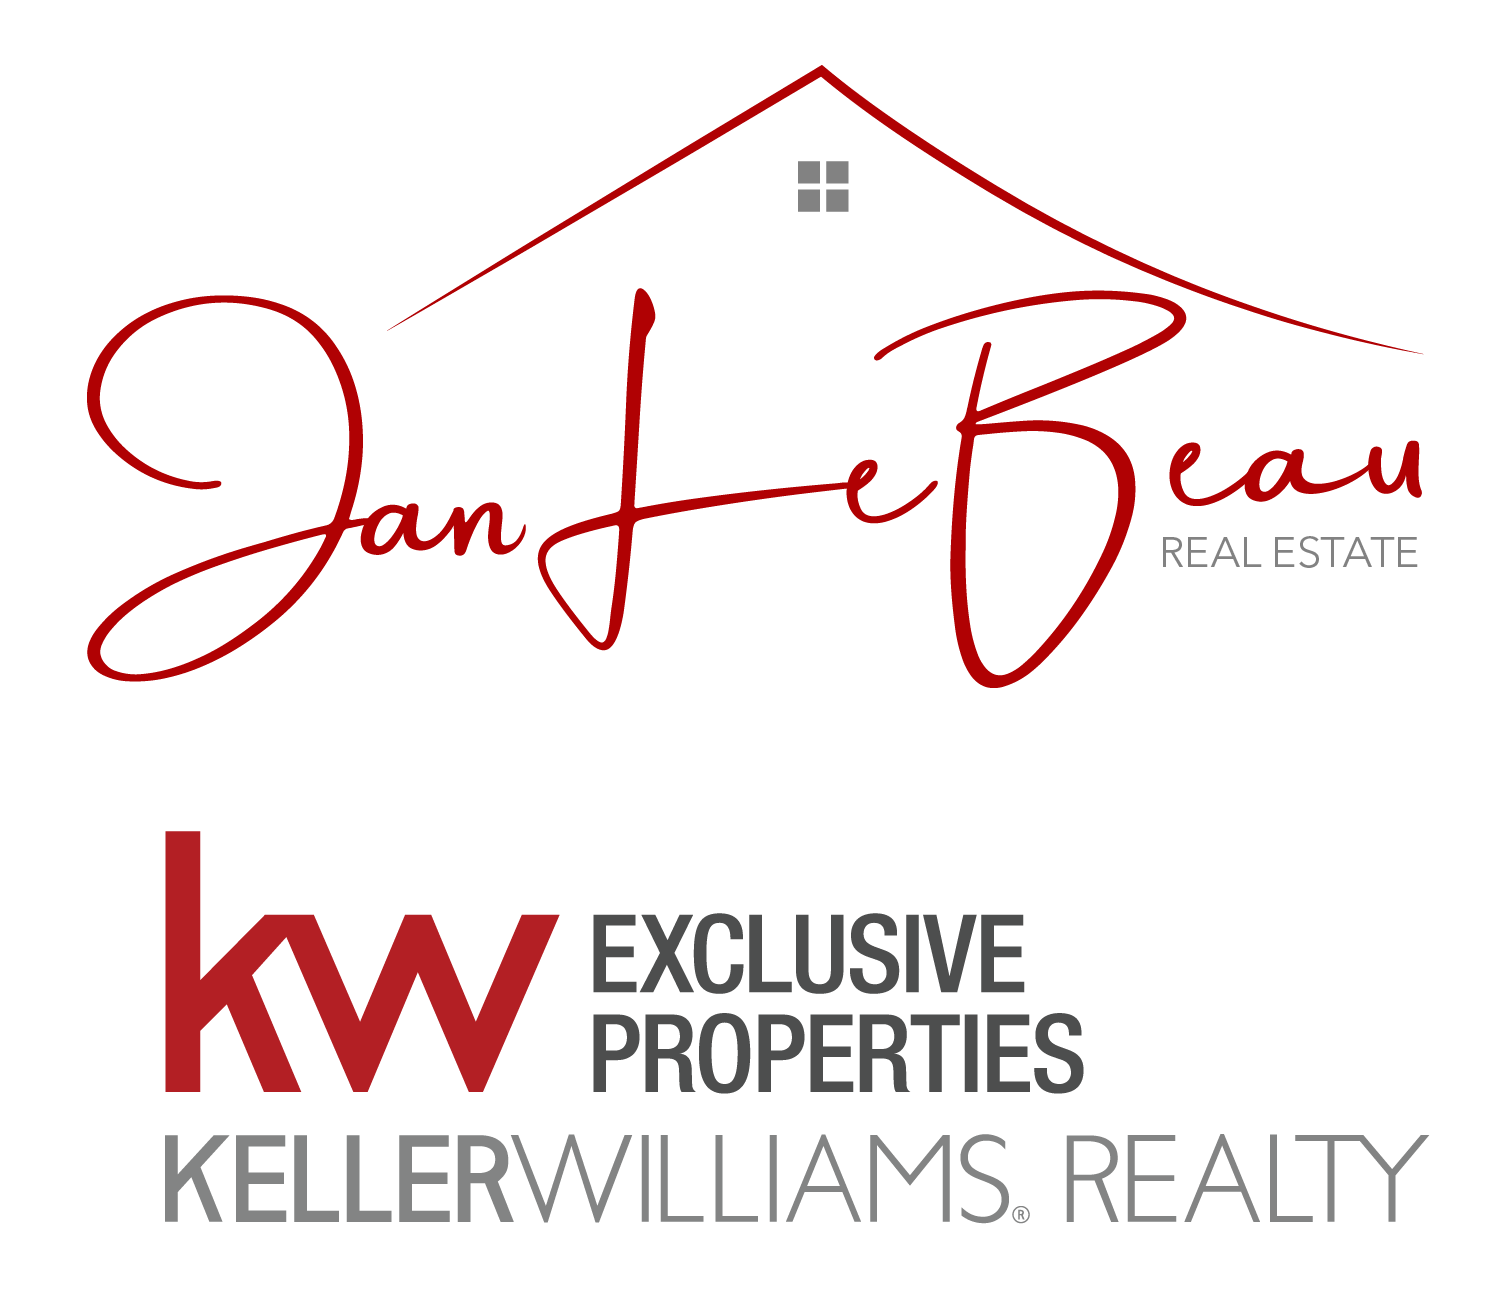 Keller Williams Exclusive Properties DRE#: 01236850